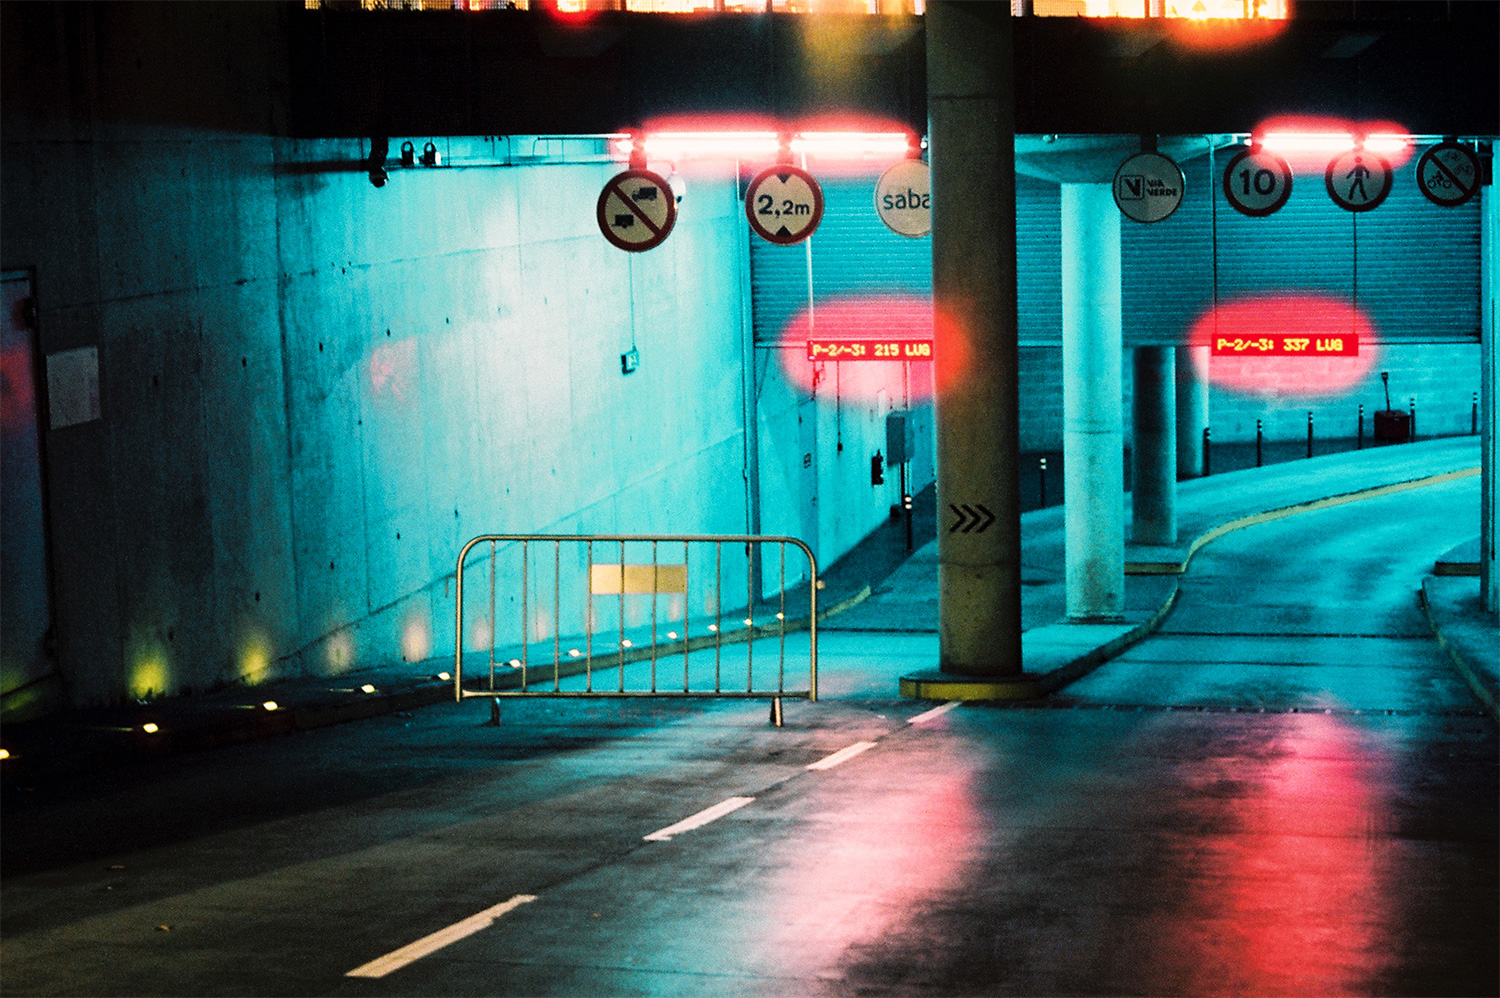 Analog photo of a parking garage entrance at night.